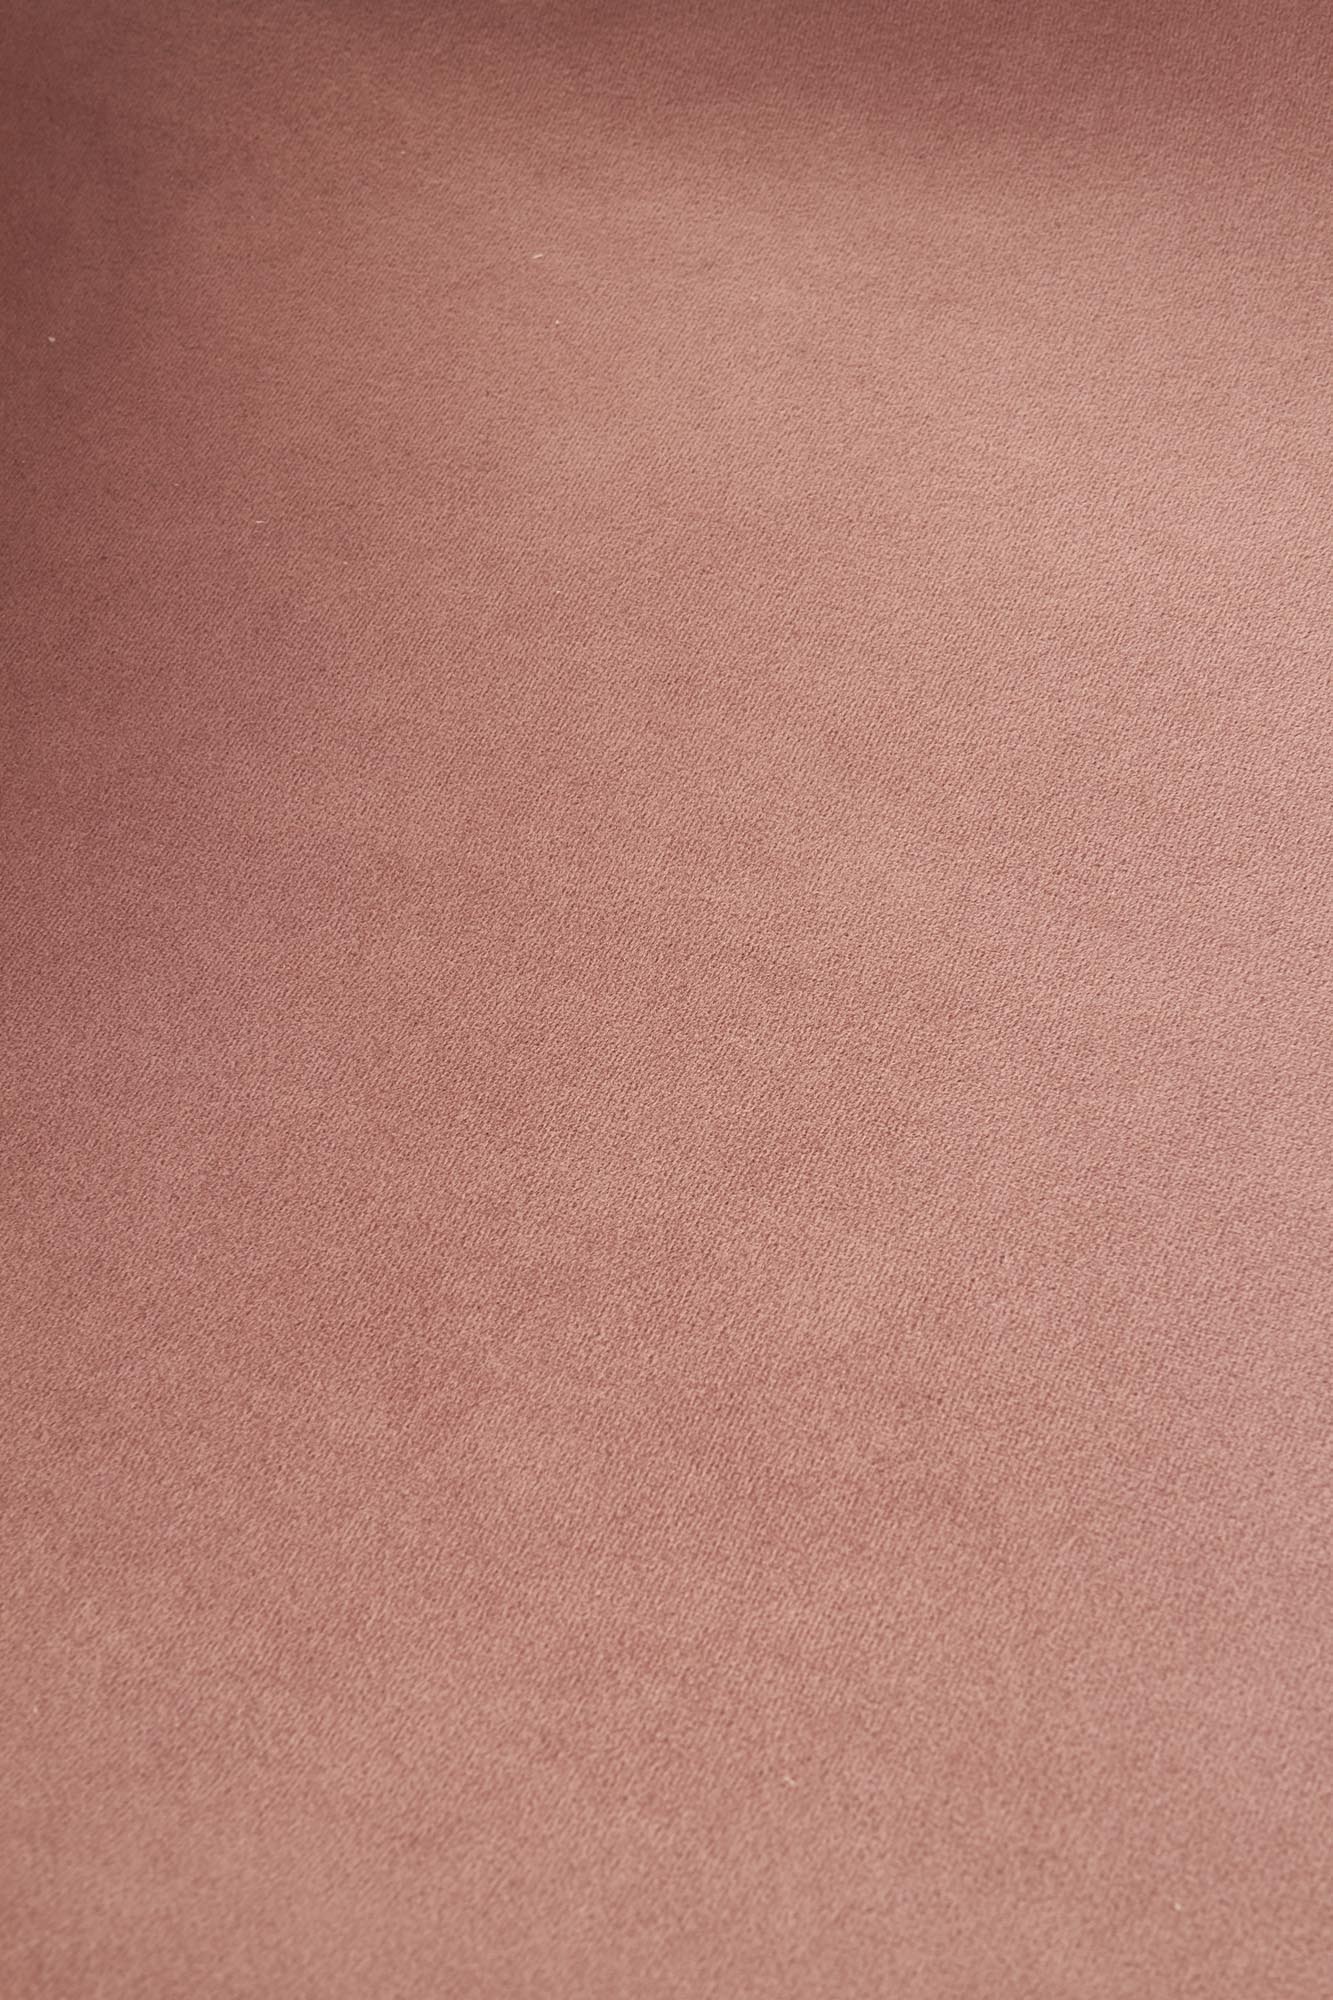 Scaun tapițat K381 - Roz / Auriu Židle k381 - Růžová / Žlutý